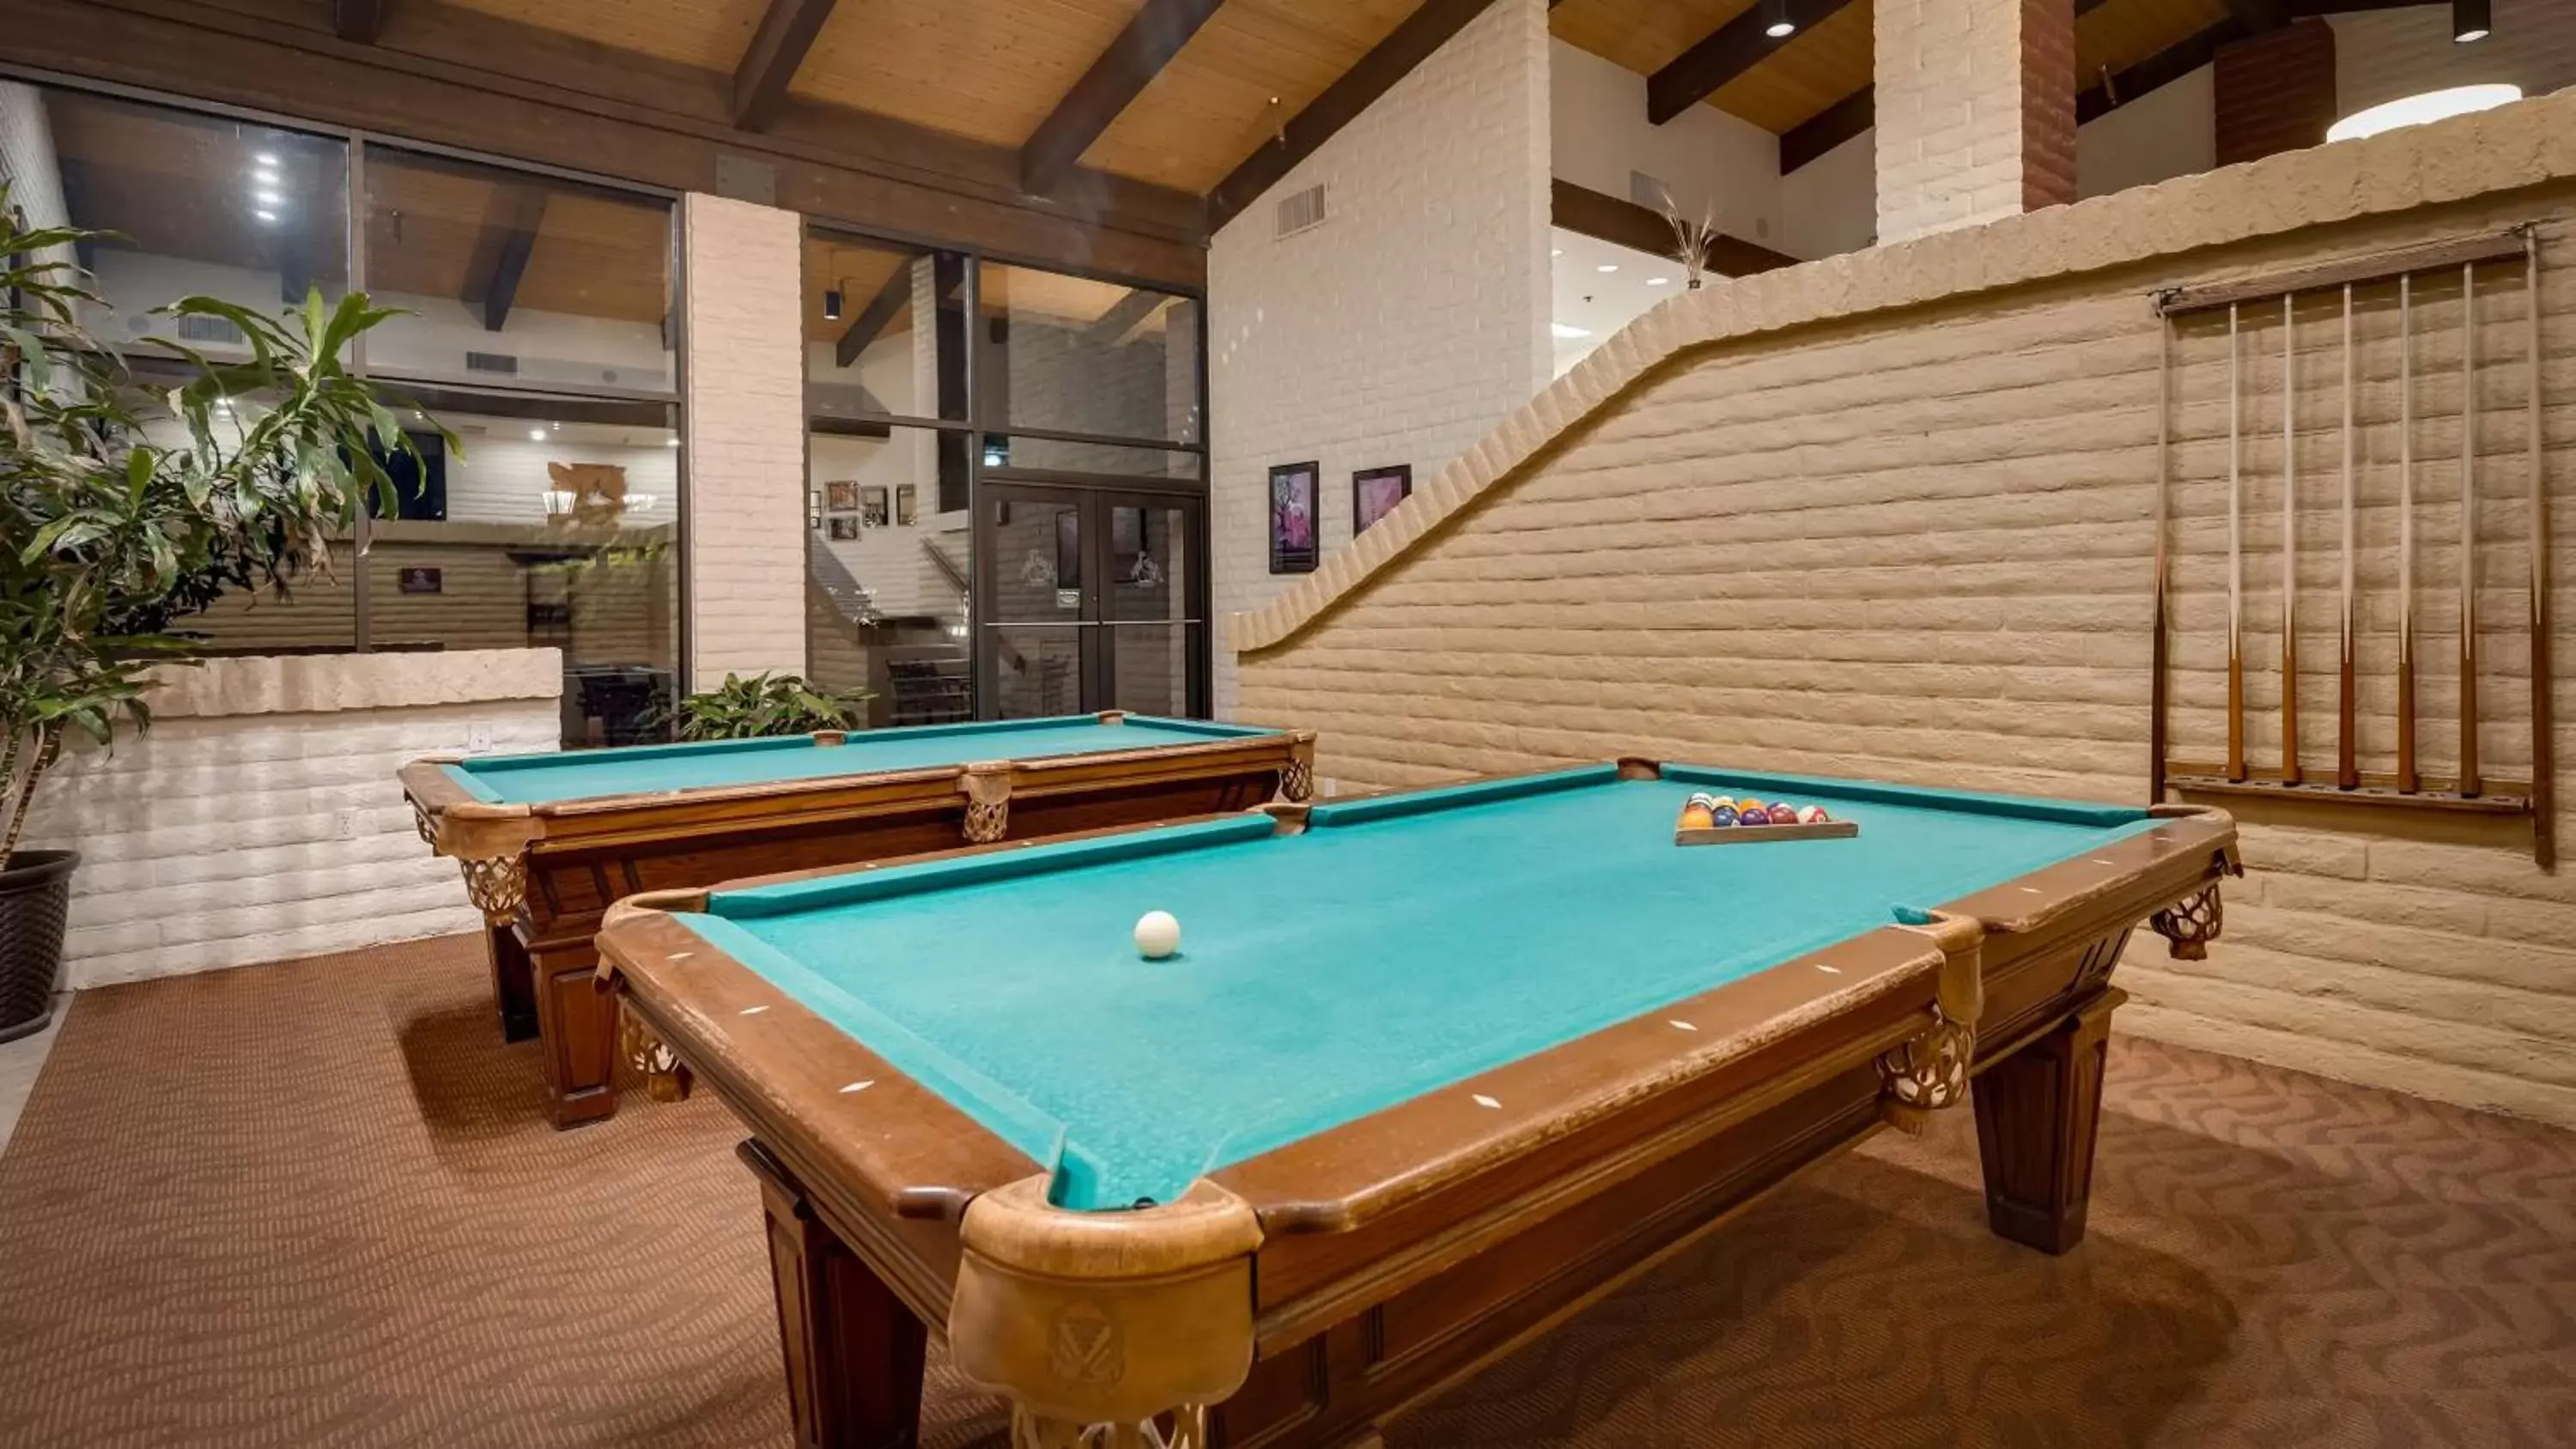 On site, Billiards in Best Western Plus Arroyo Roble Hotel & Creekside Villas